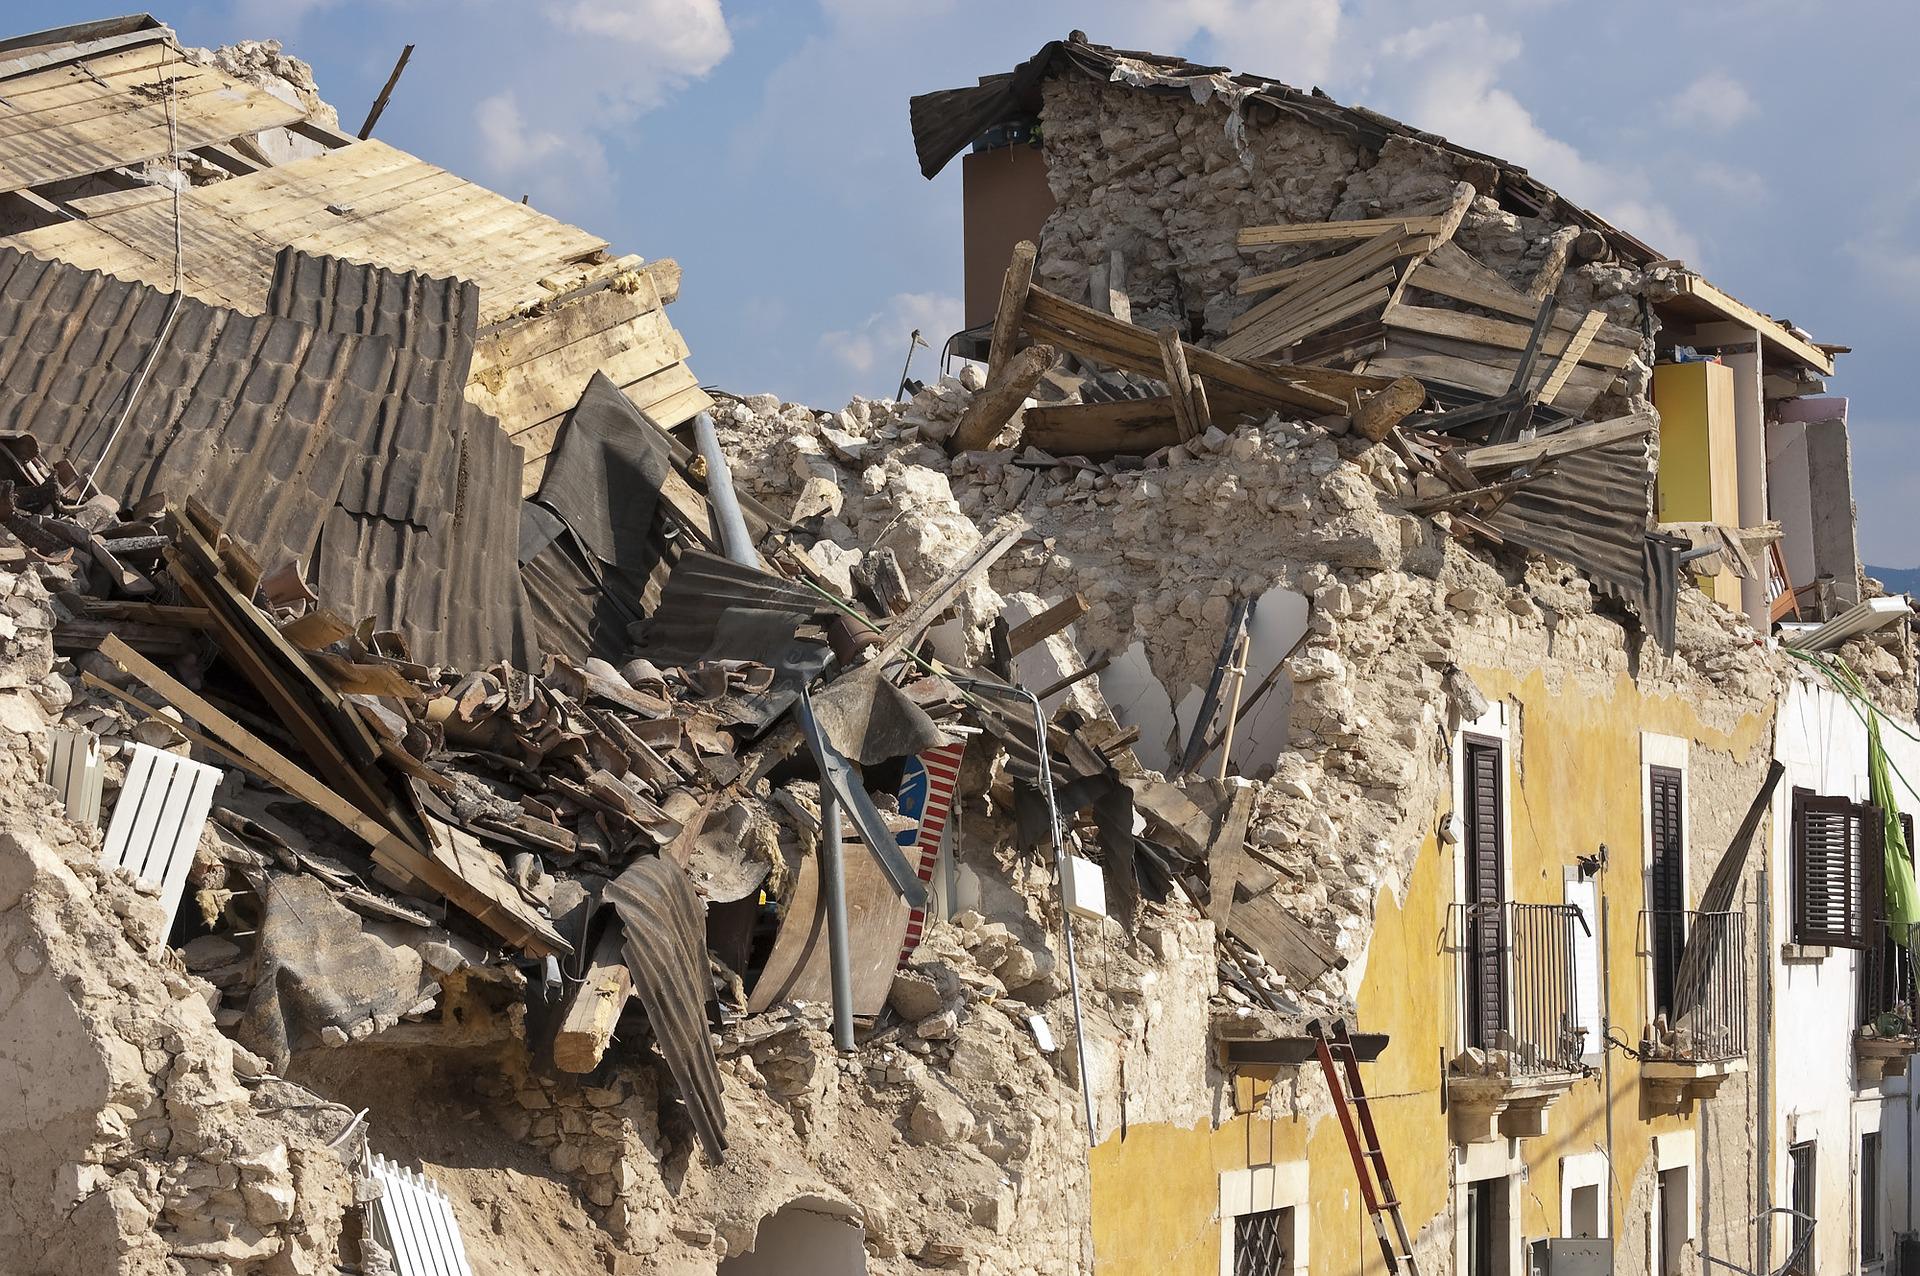 https://pixabay.com/photos/earthquake-rubble-collapse-disaster-1665891/